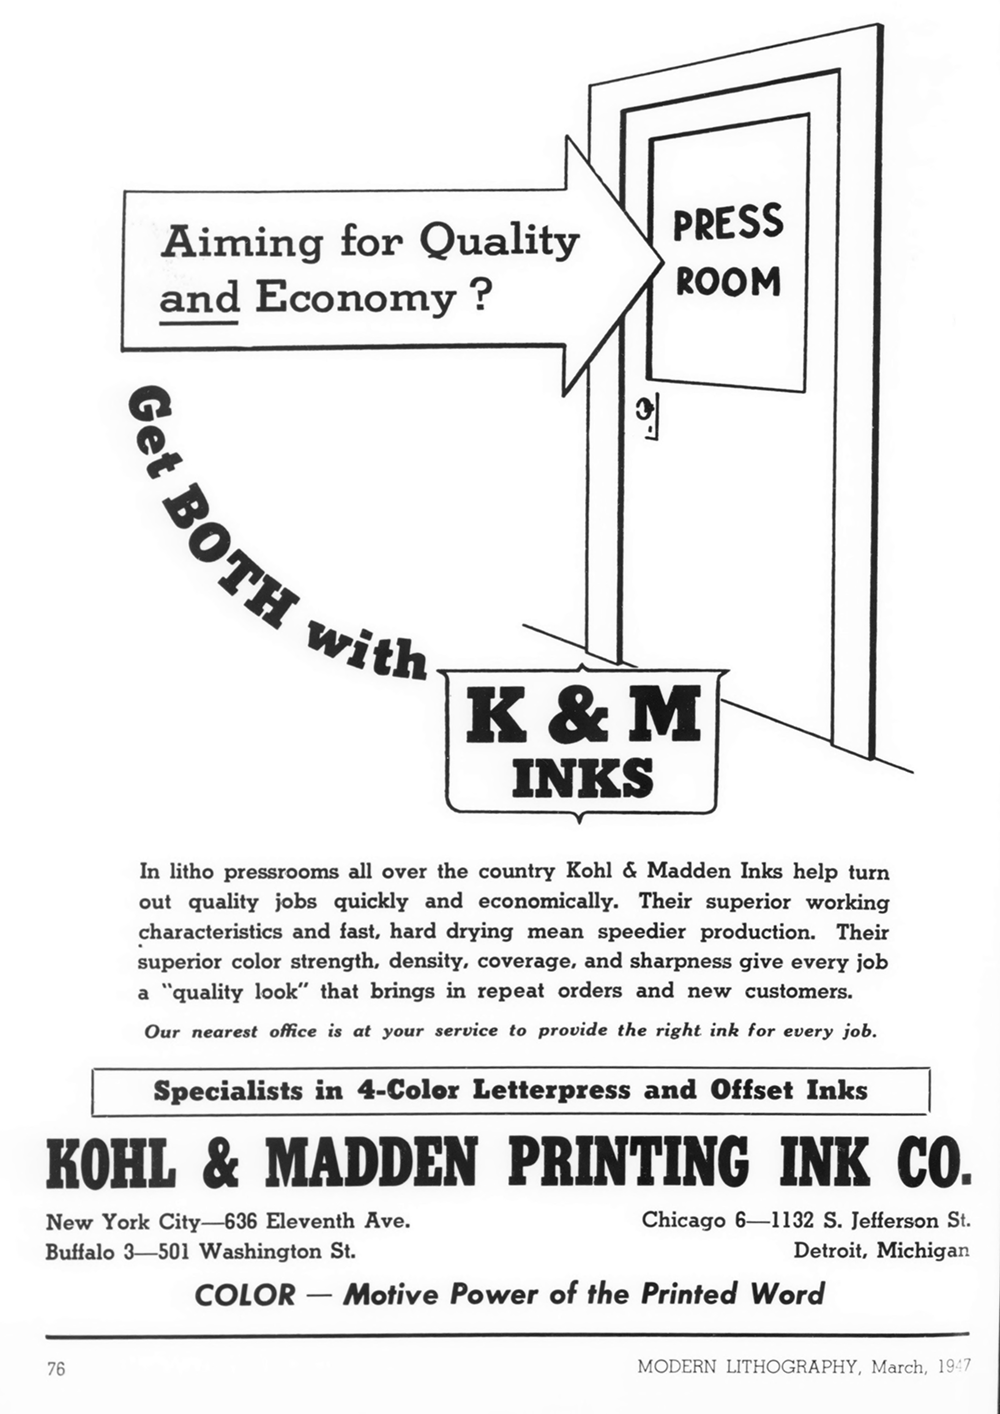 Kohl & Madden Ink Company Plant, Chicago